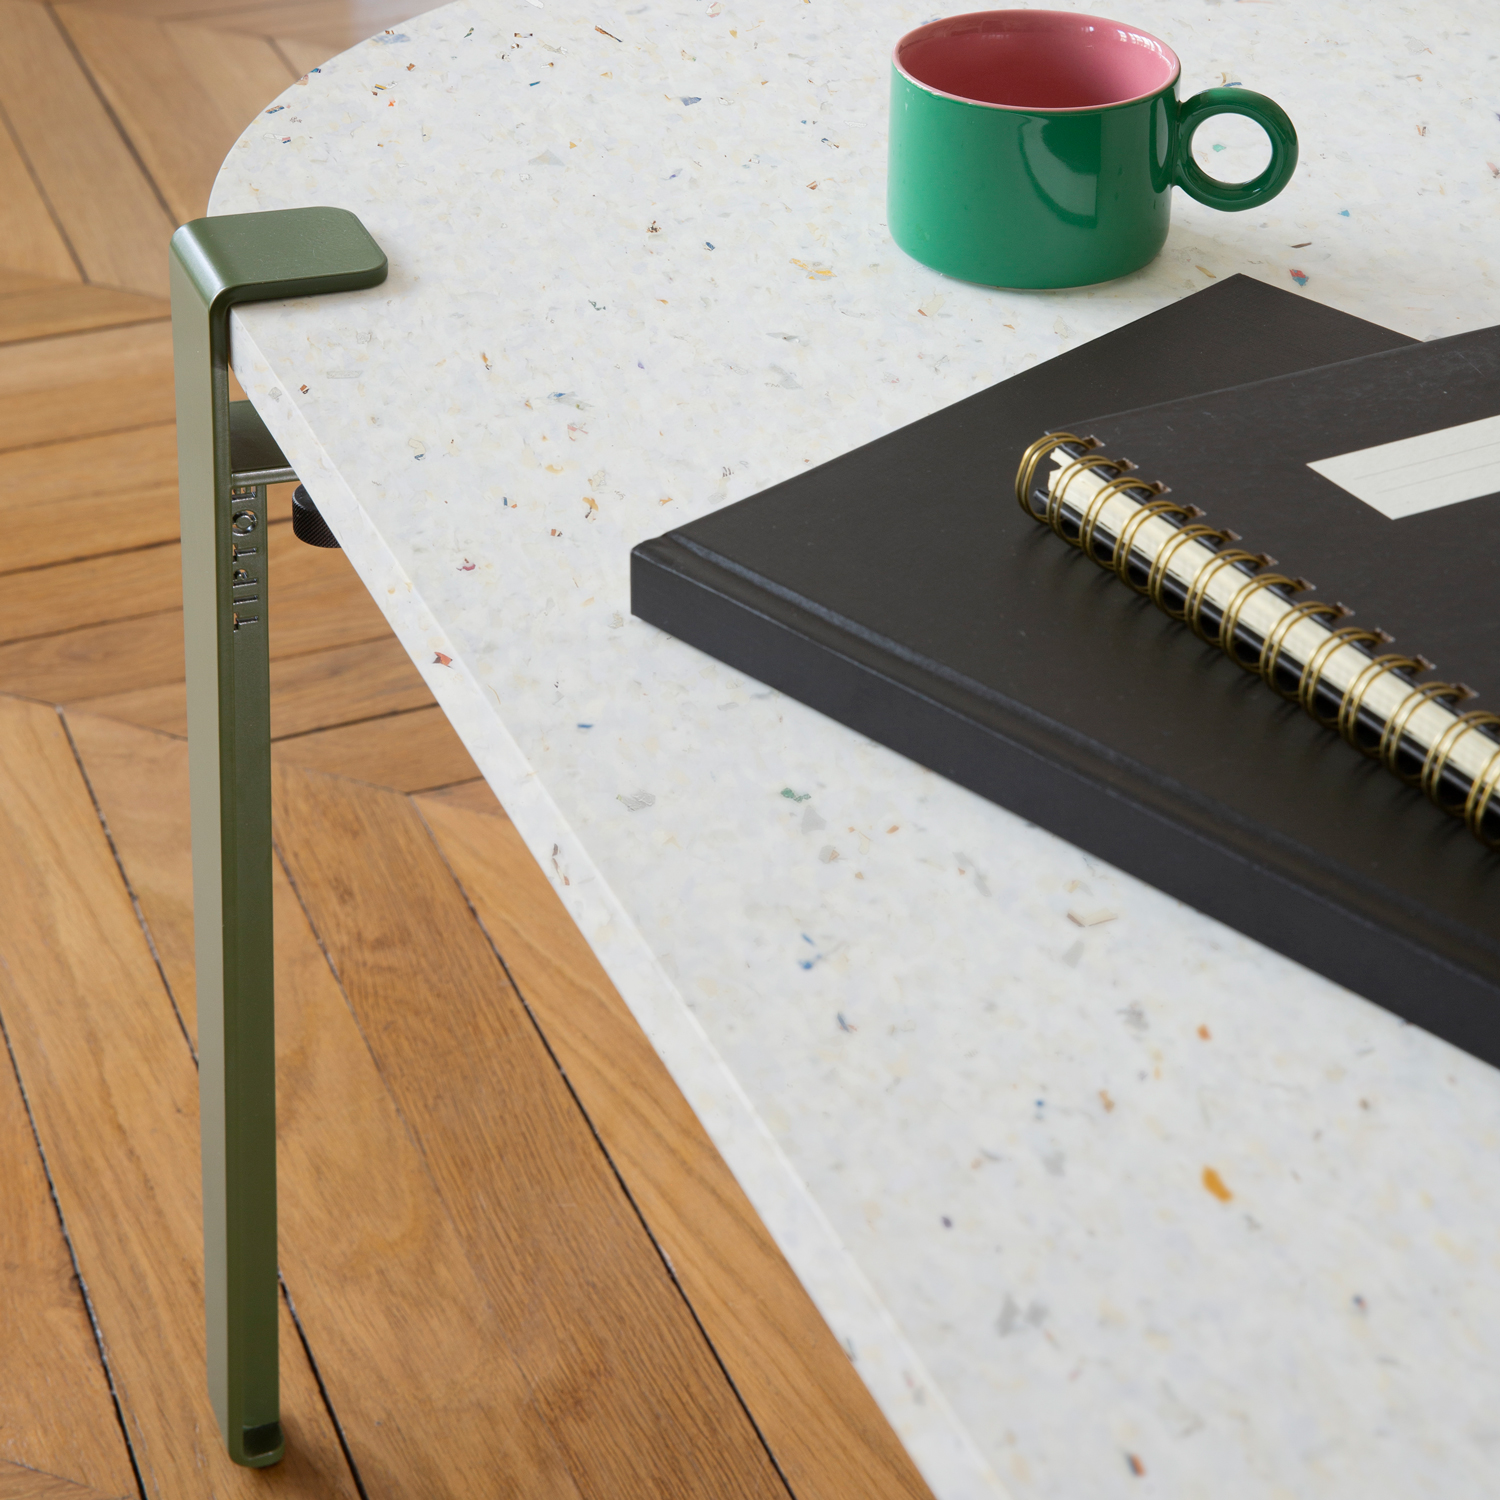 Coffee table leg – 43 cm